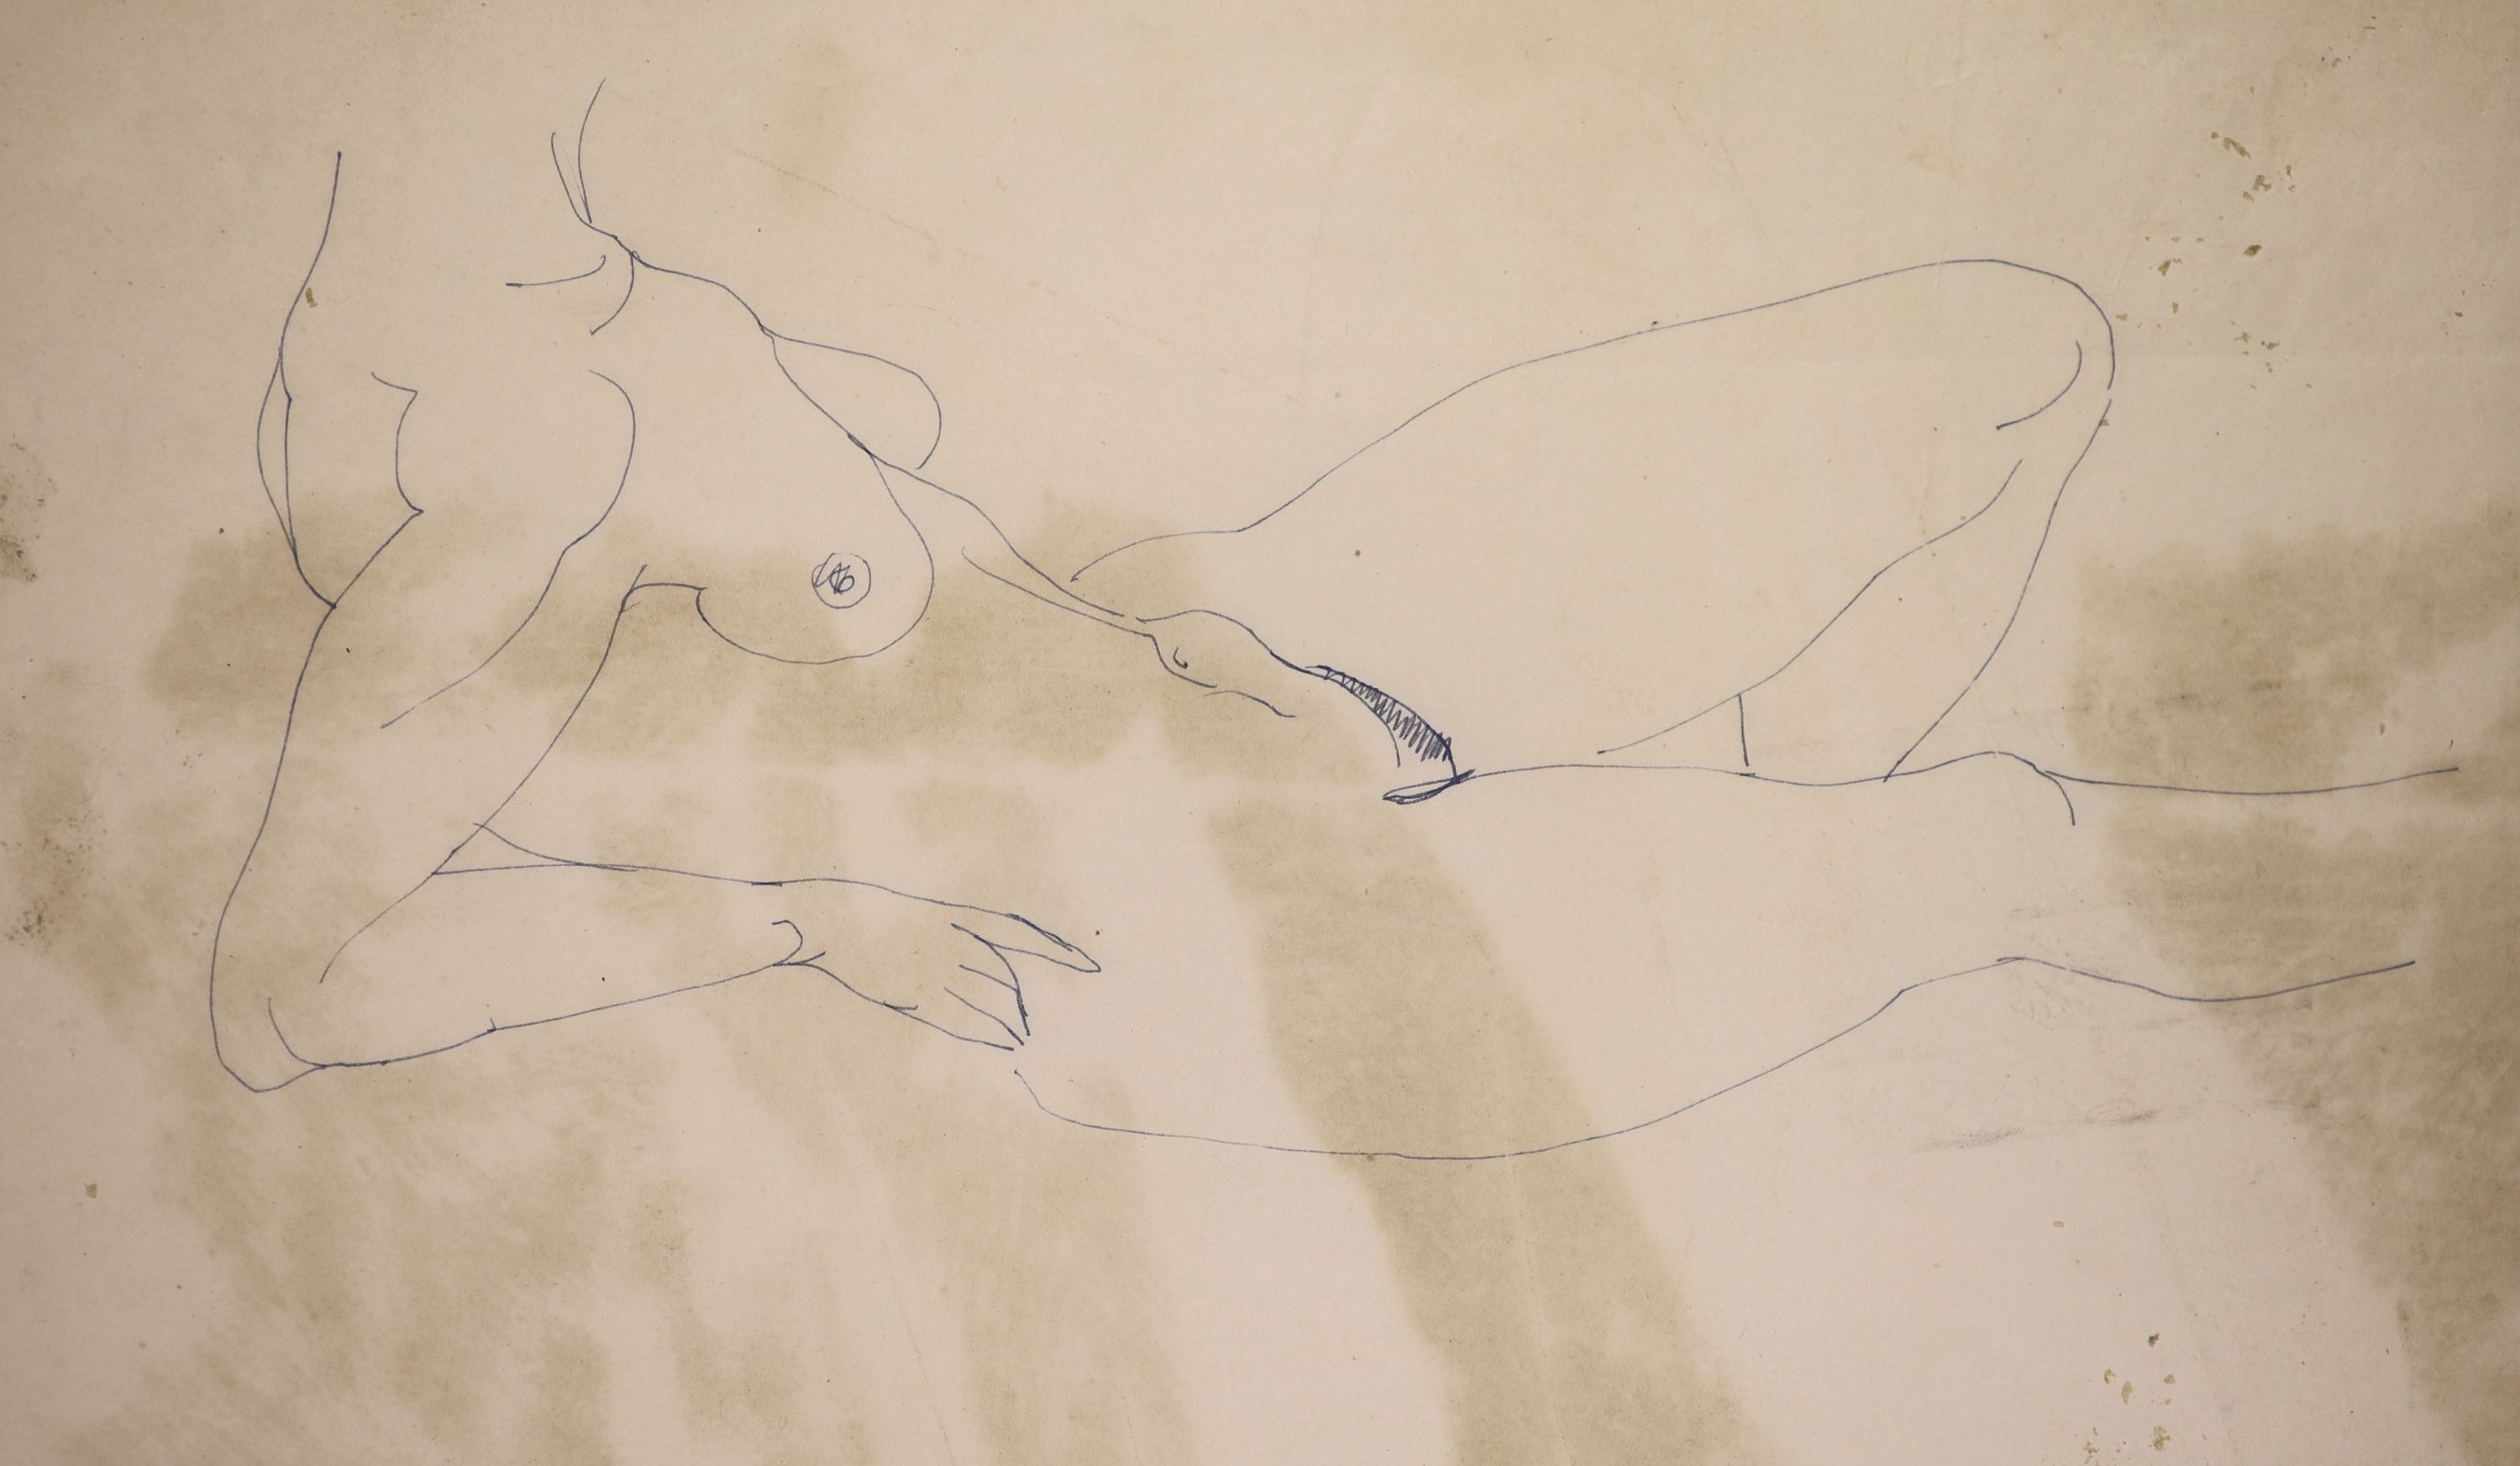 Henri Gaudier-Brzeska (1891-1915), Reclining nude, circa 1912, pen and ink on paper, 25 x 38cms.